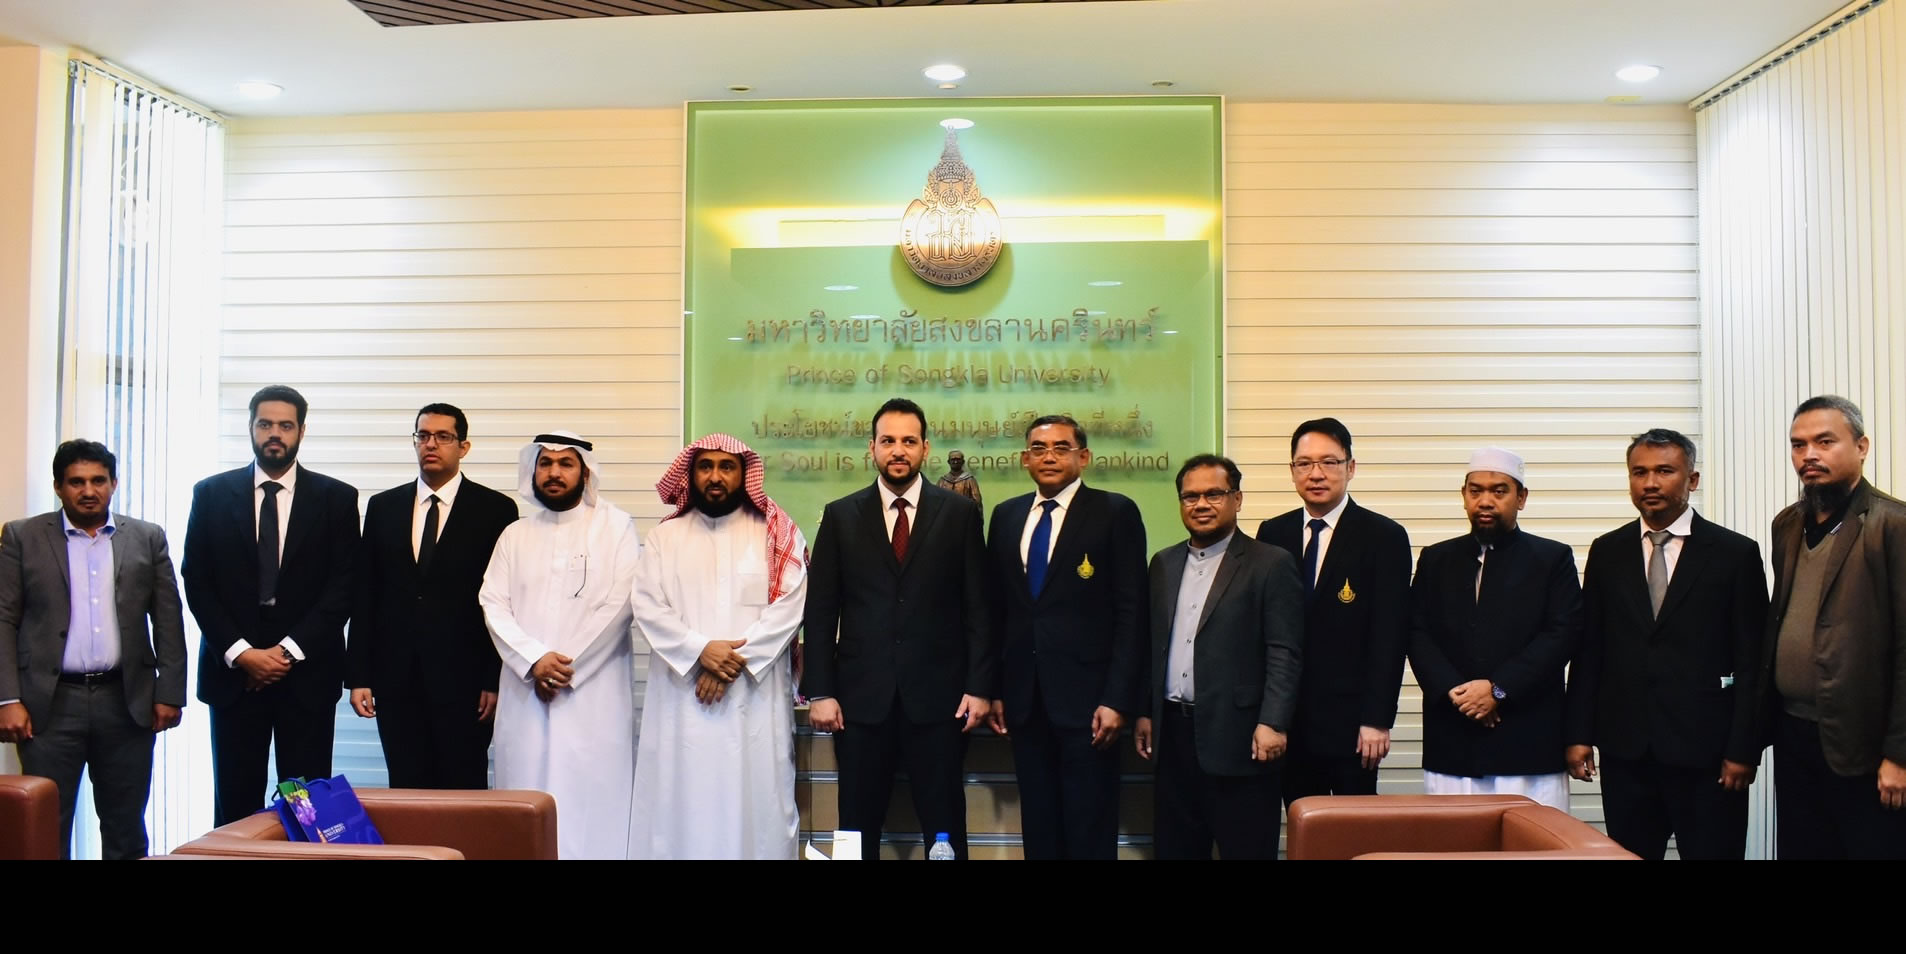 Distinguished Delegates from the Islamic University of Madinah, Kingdom of Saudi Arabia, visit PSU